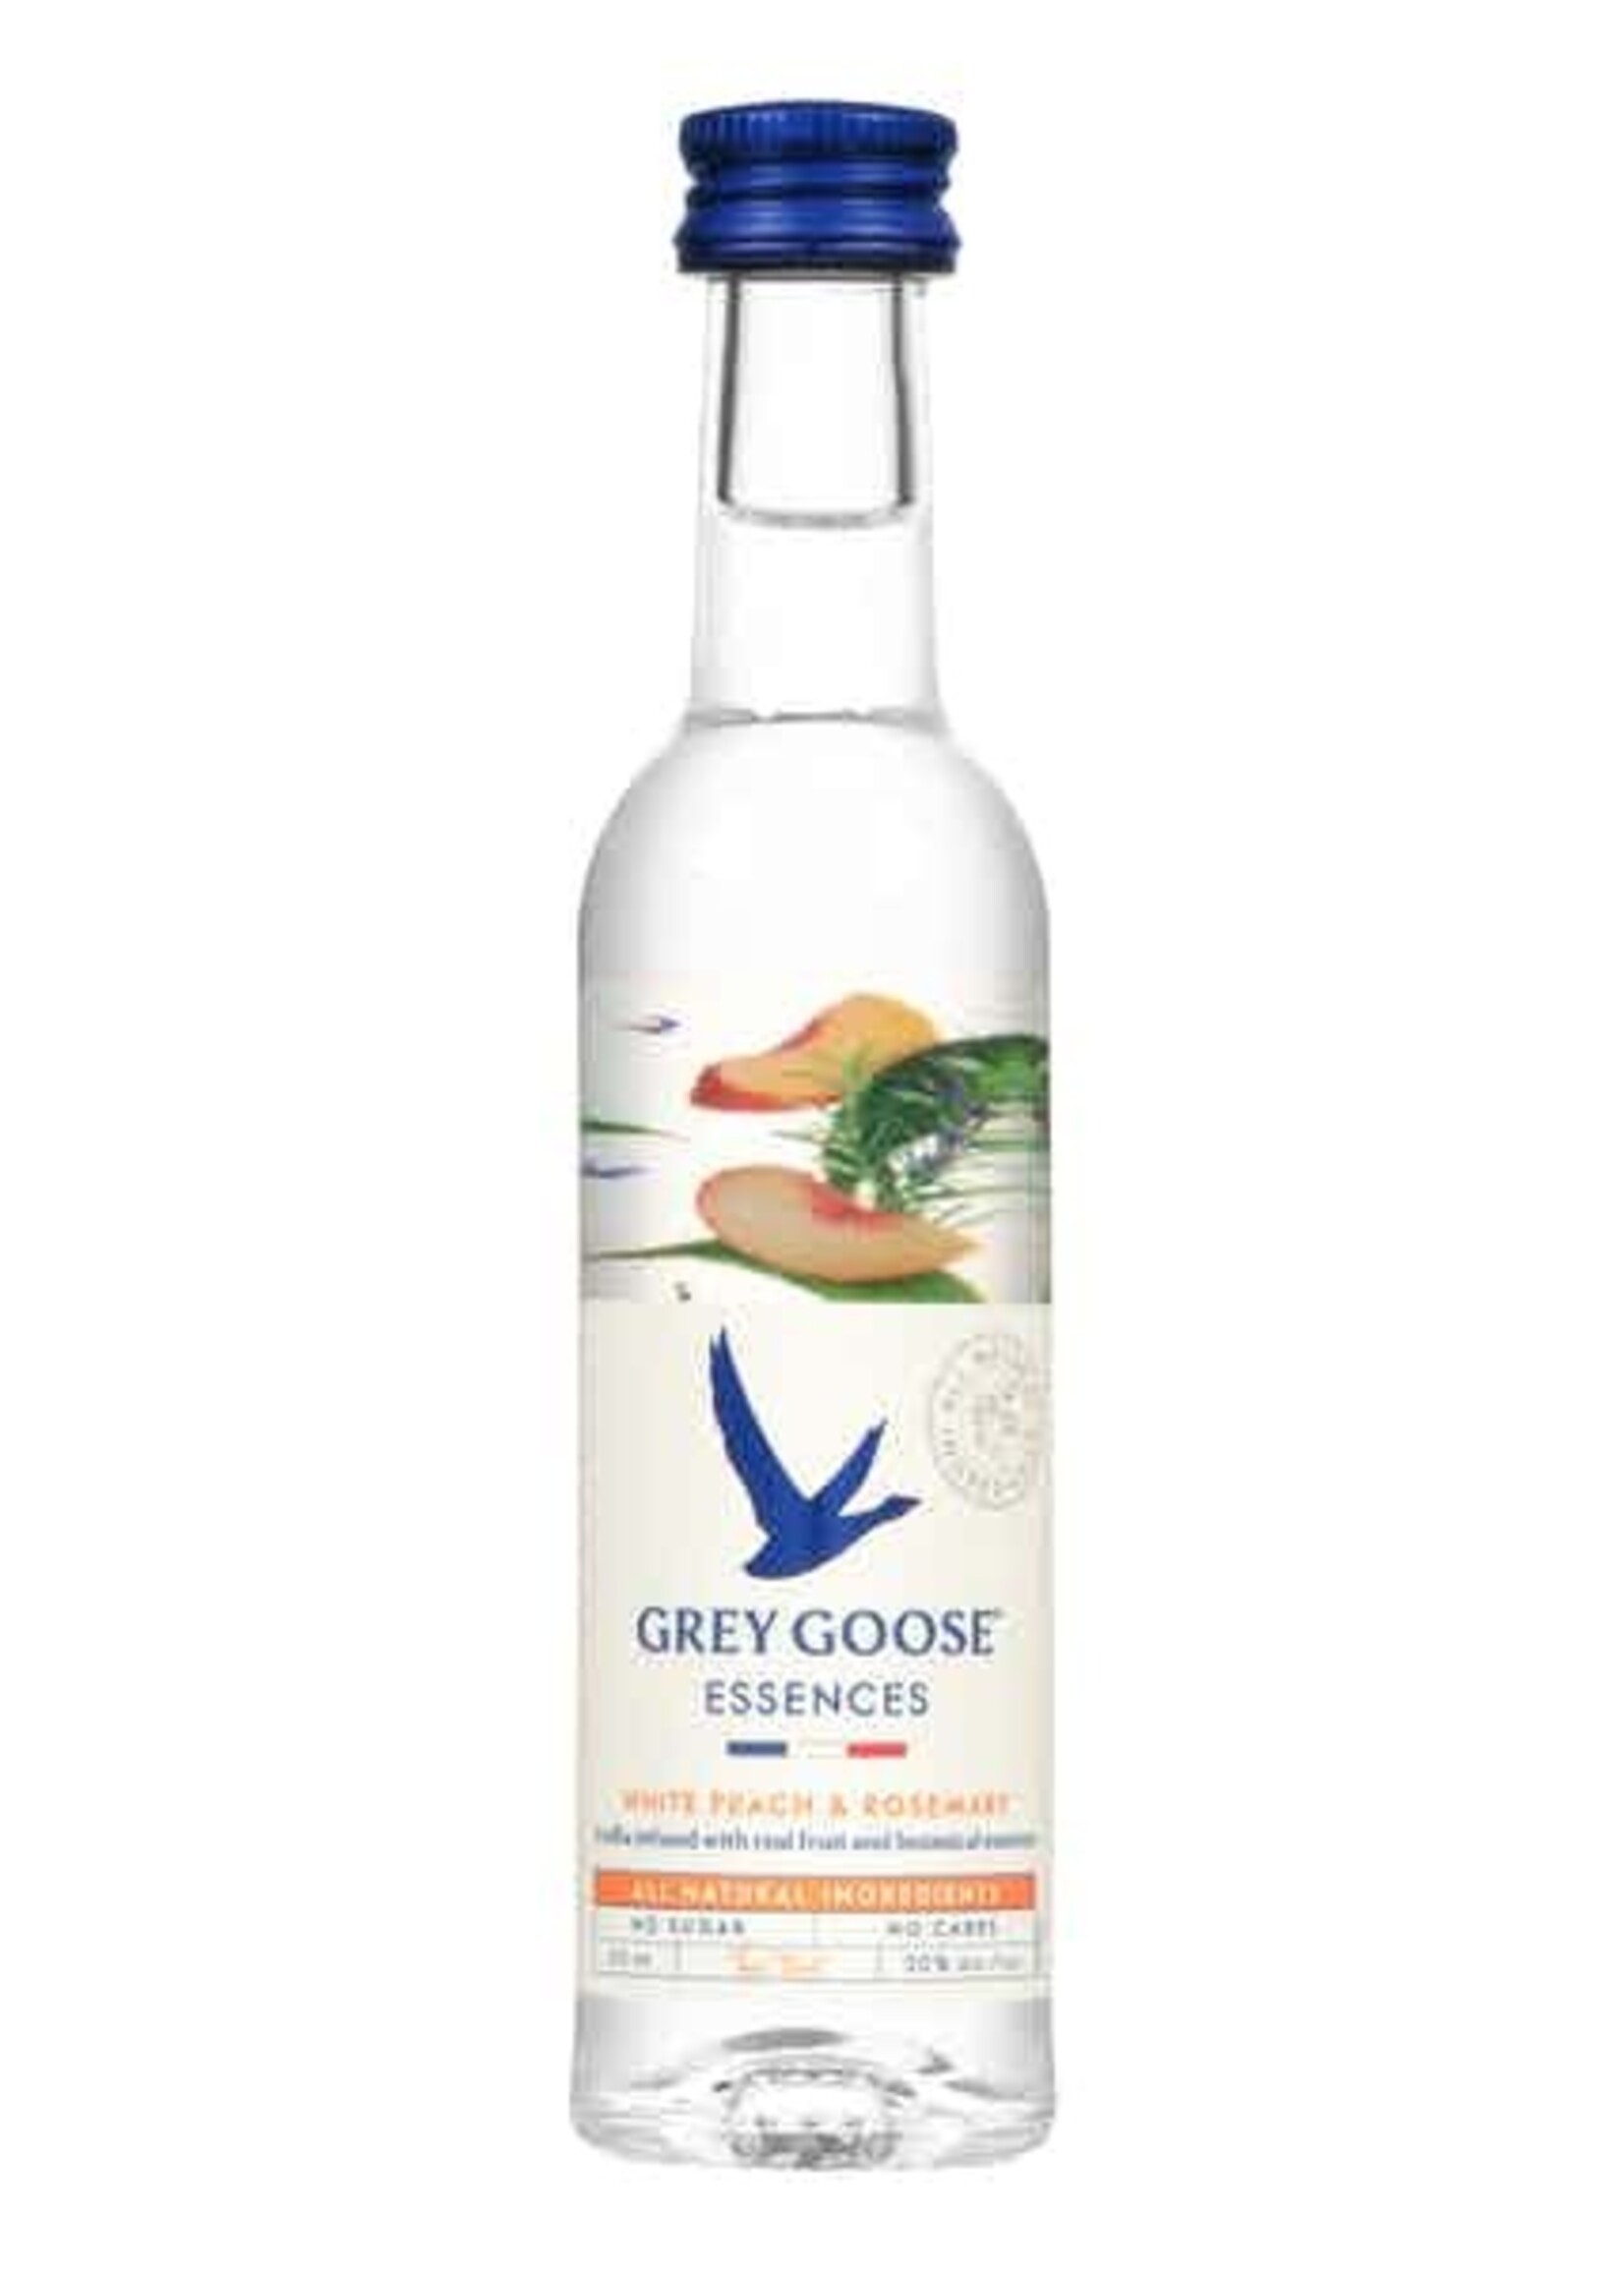 Grey Goose Vodka Grey Goose Essences White Peach & Rosemary 60Proof 50ml